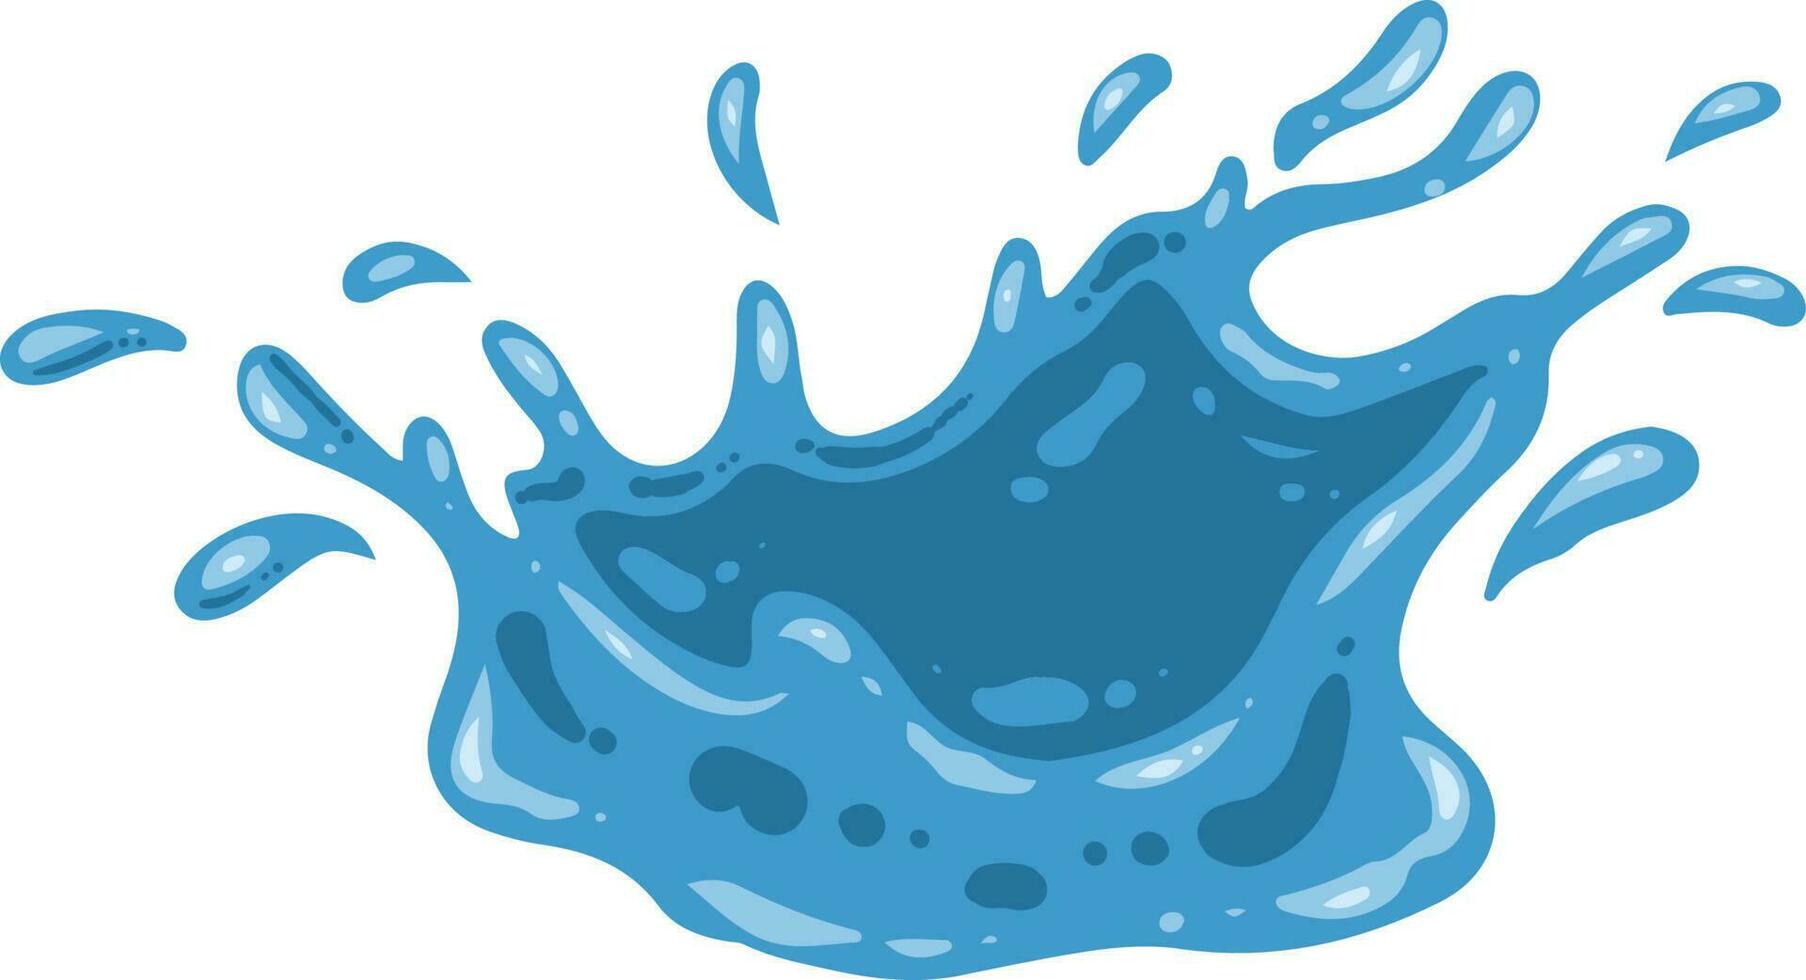 Fresh Blue Water Splash Element Illustration Set vector